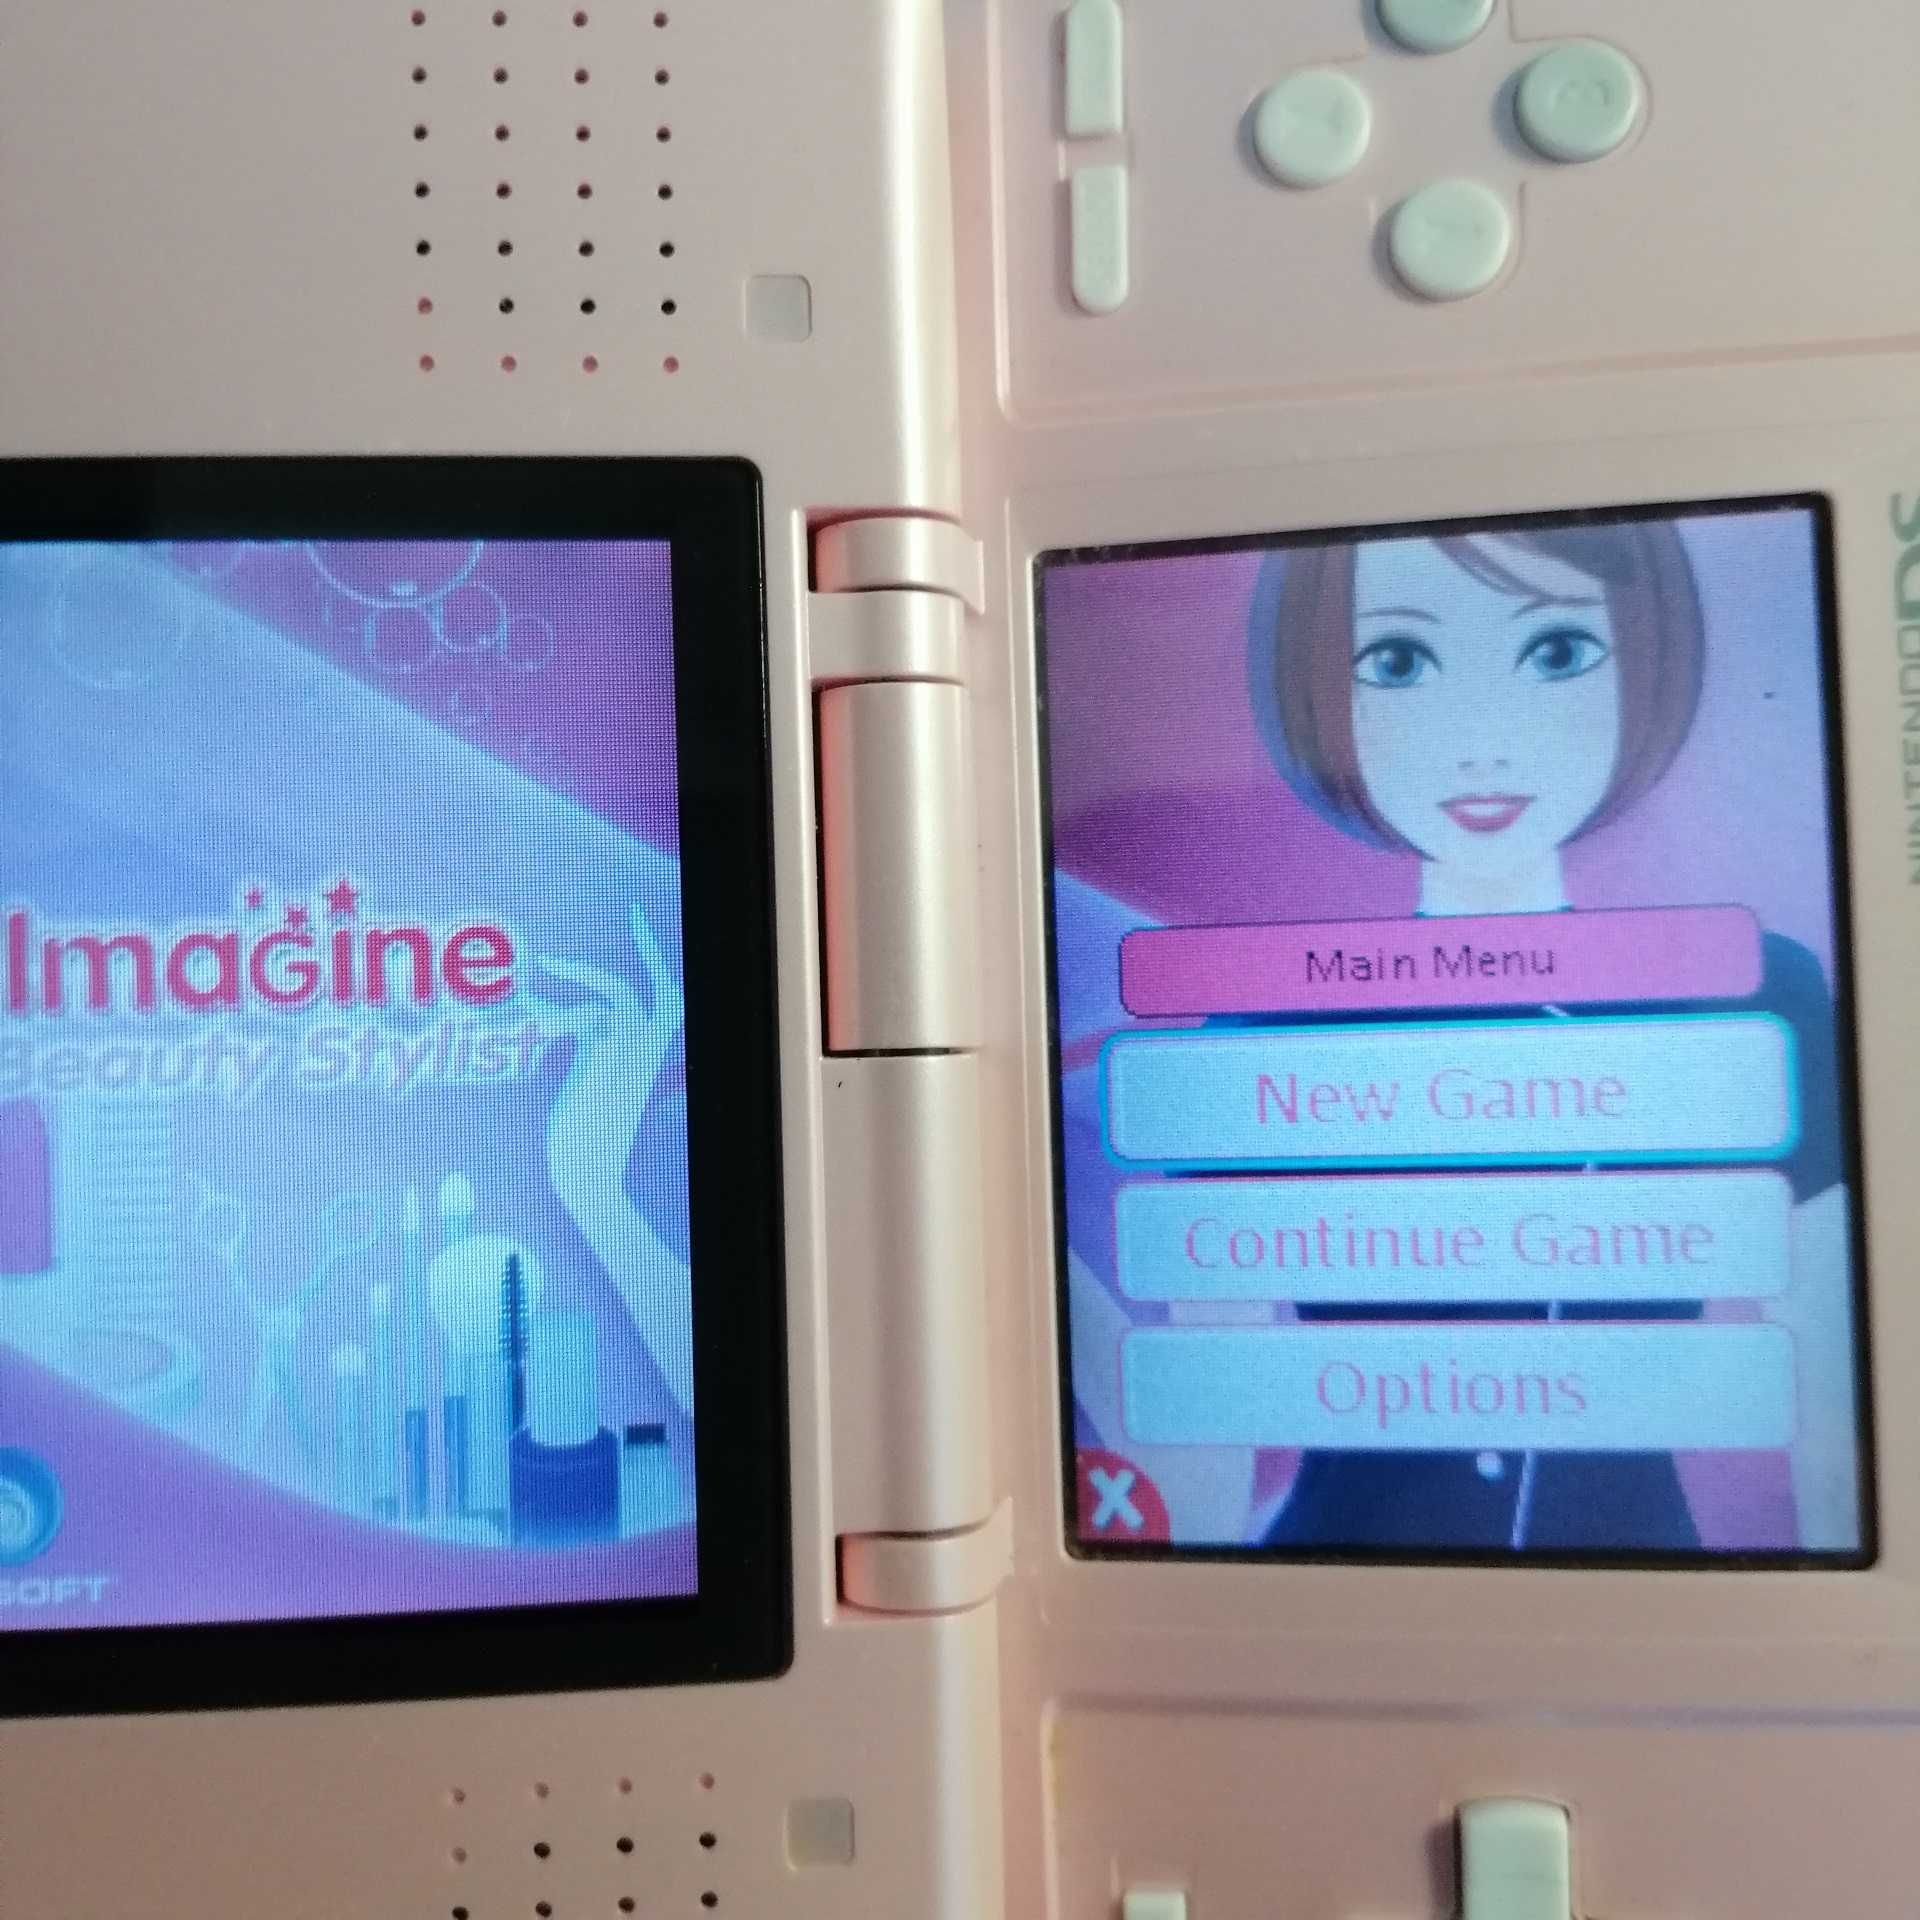 Oryginalna! Gra na konsolę Nintendo DS - Imagine - Beauty Stylist